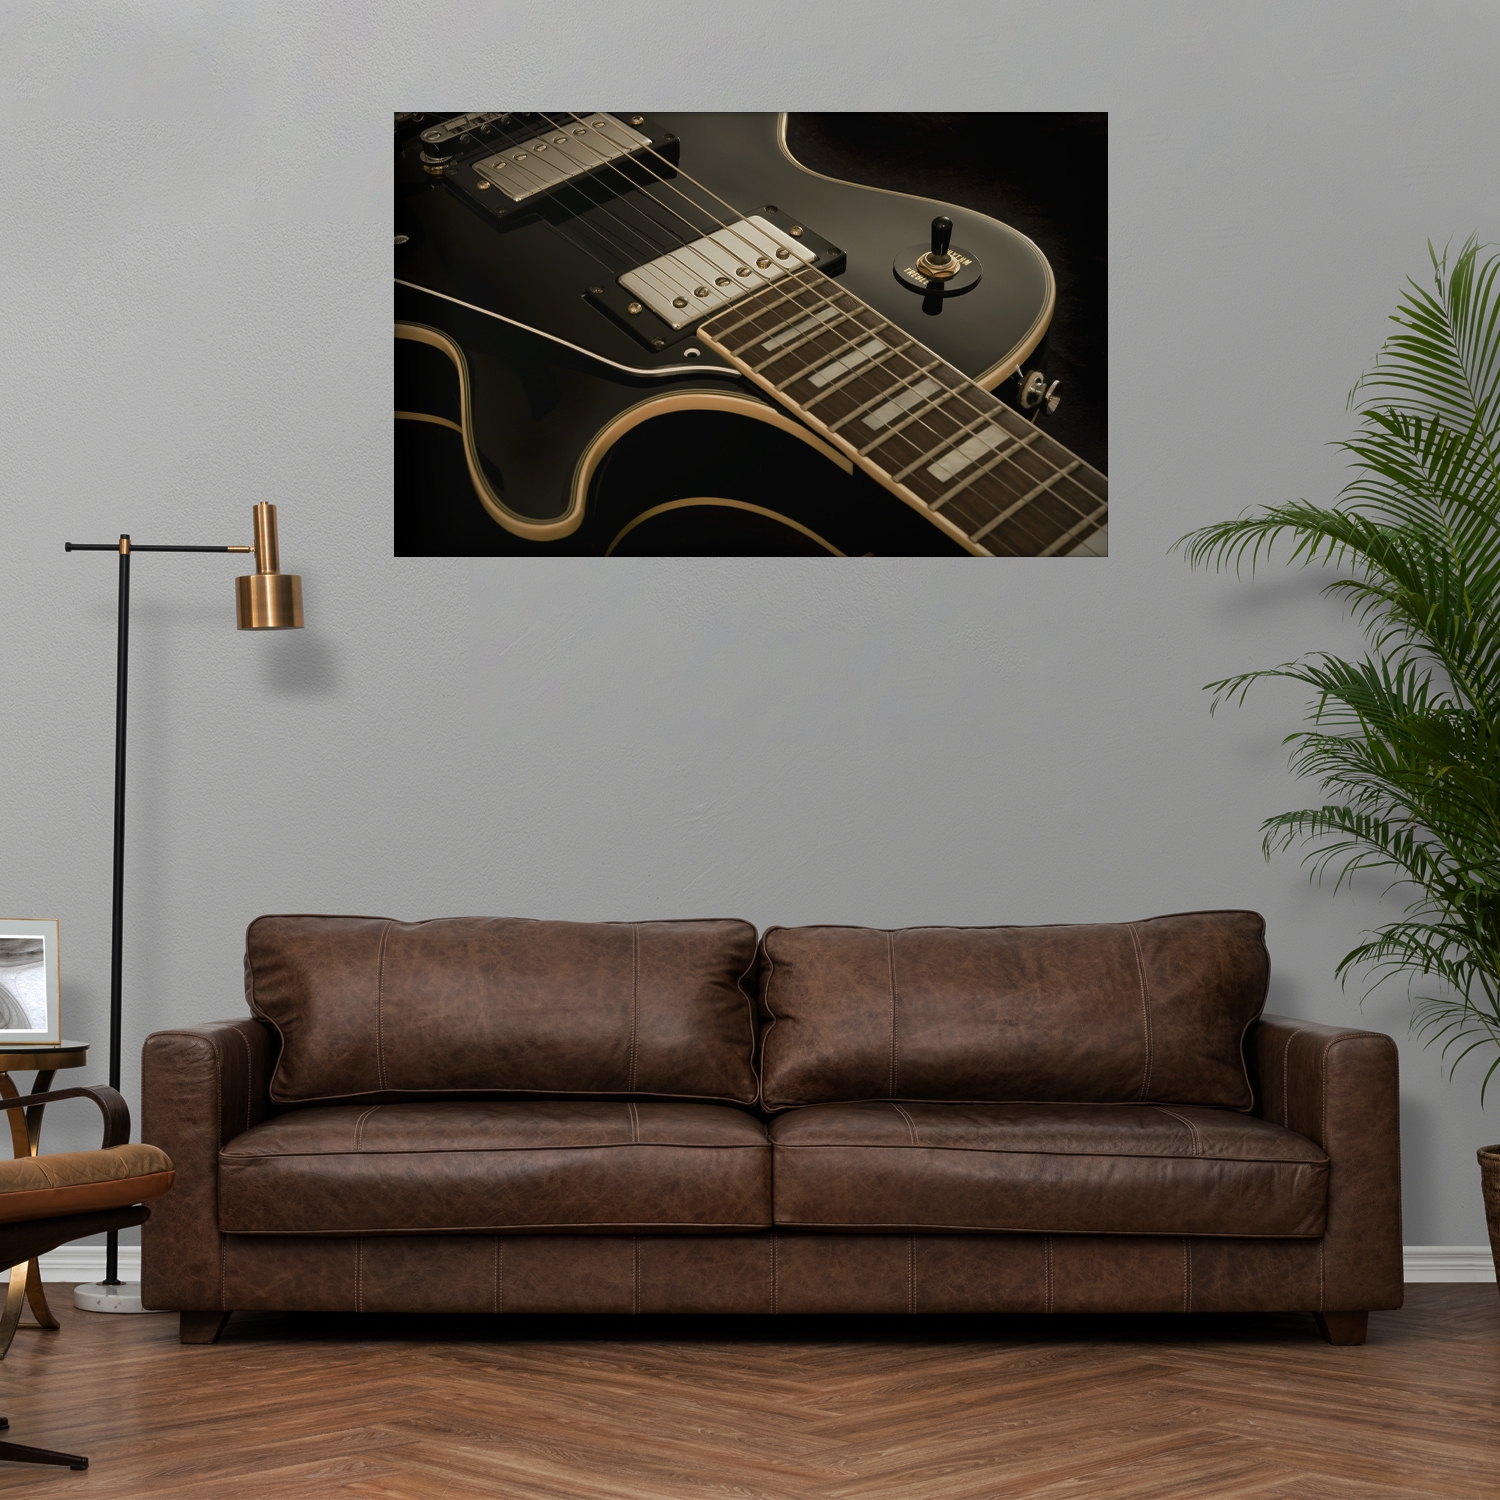 Tablou canvas luminos Guitar Black, CLT0291, Picma, dualview, panza + sasiu lemn, 60 x 90 cm